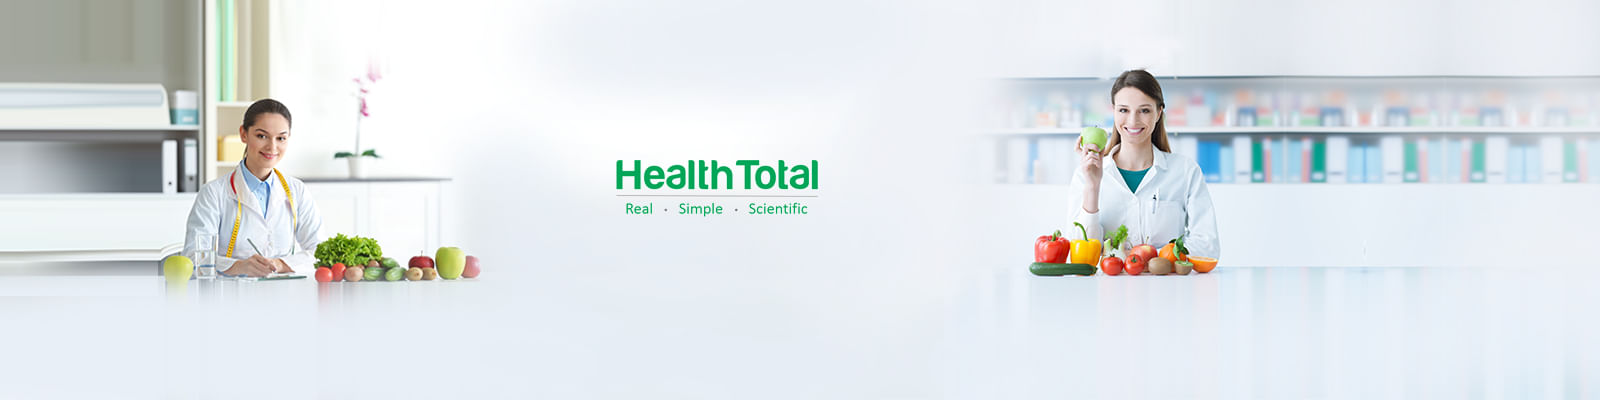 Health-total By Anjali Mukerjee